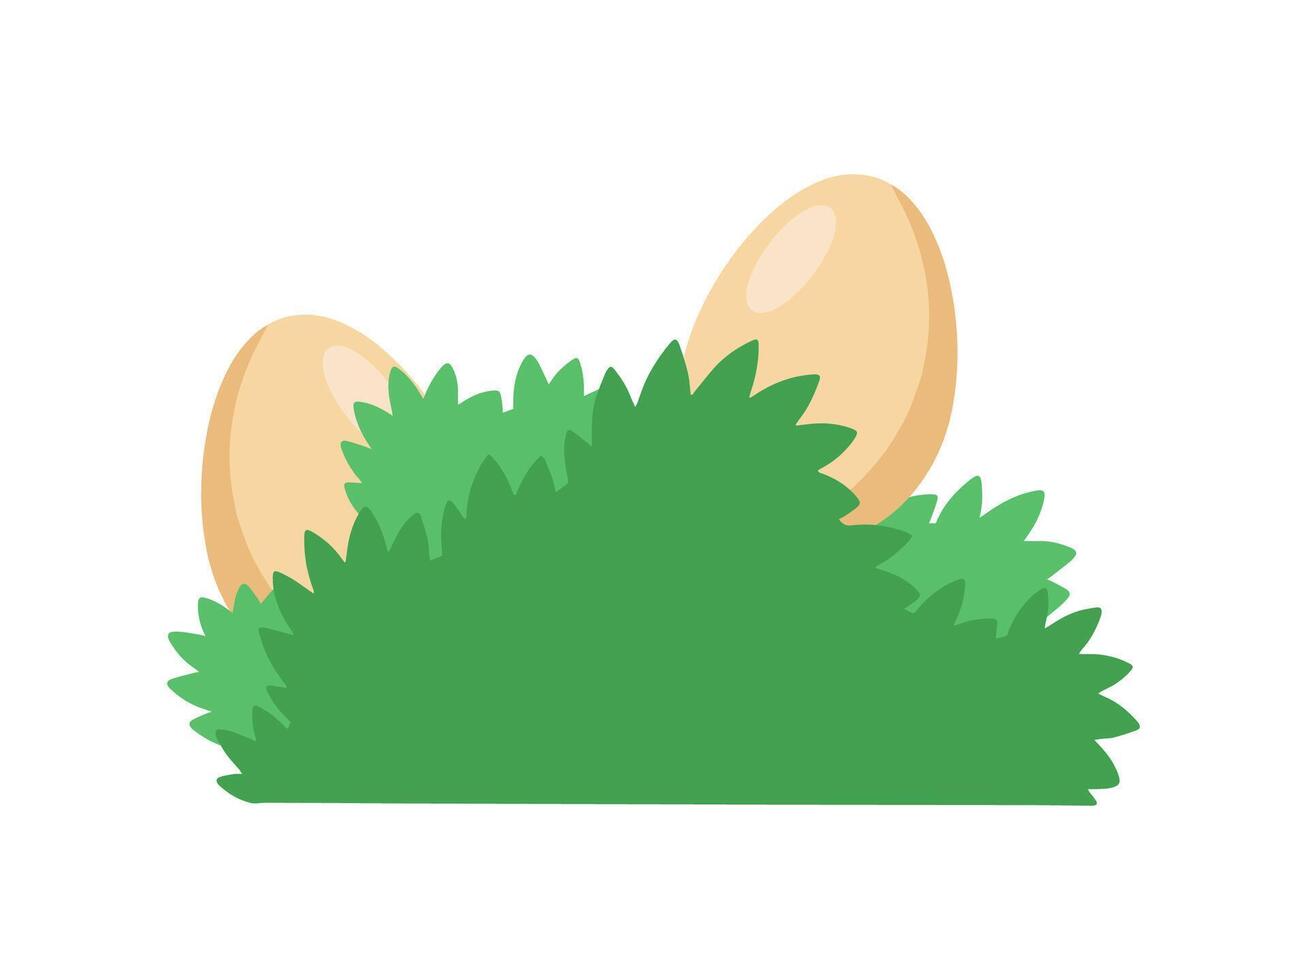 Pascua de Resurrección huevos antecedentes acostado en césped vector